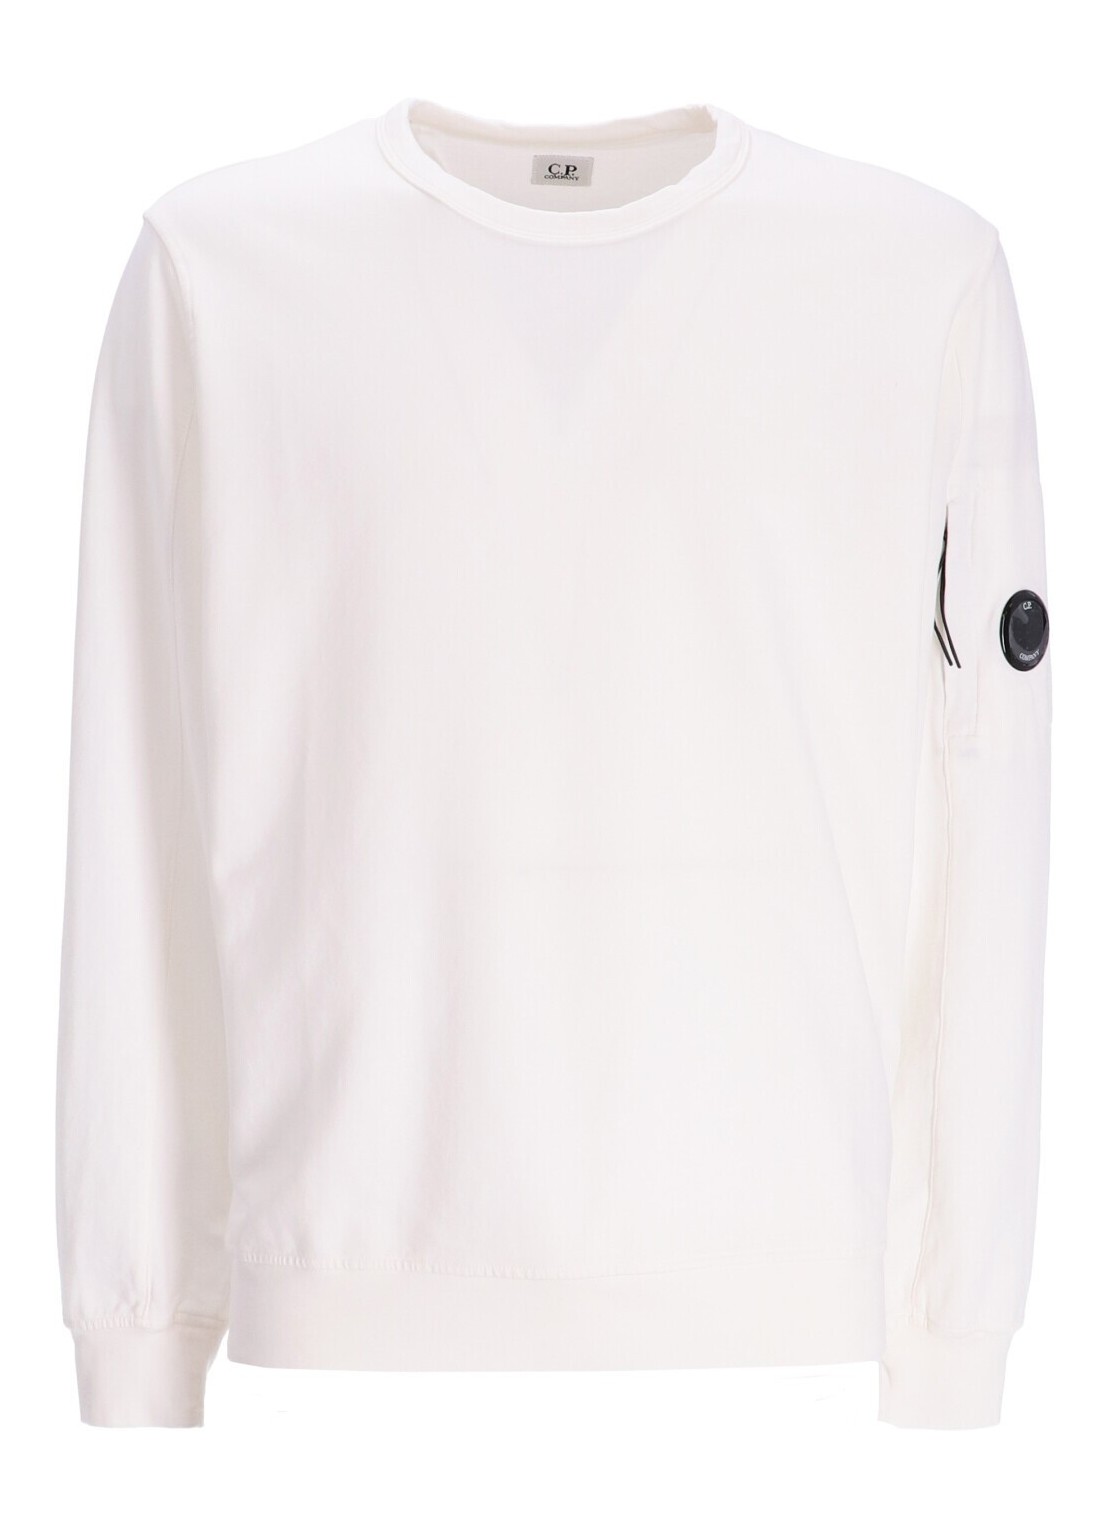 Sudadera c.p.company sweater man light fleece lens sweatshirt 15cmss032a002246g 103 talla L
 